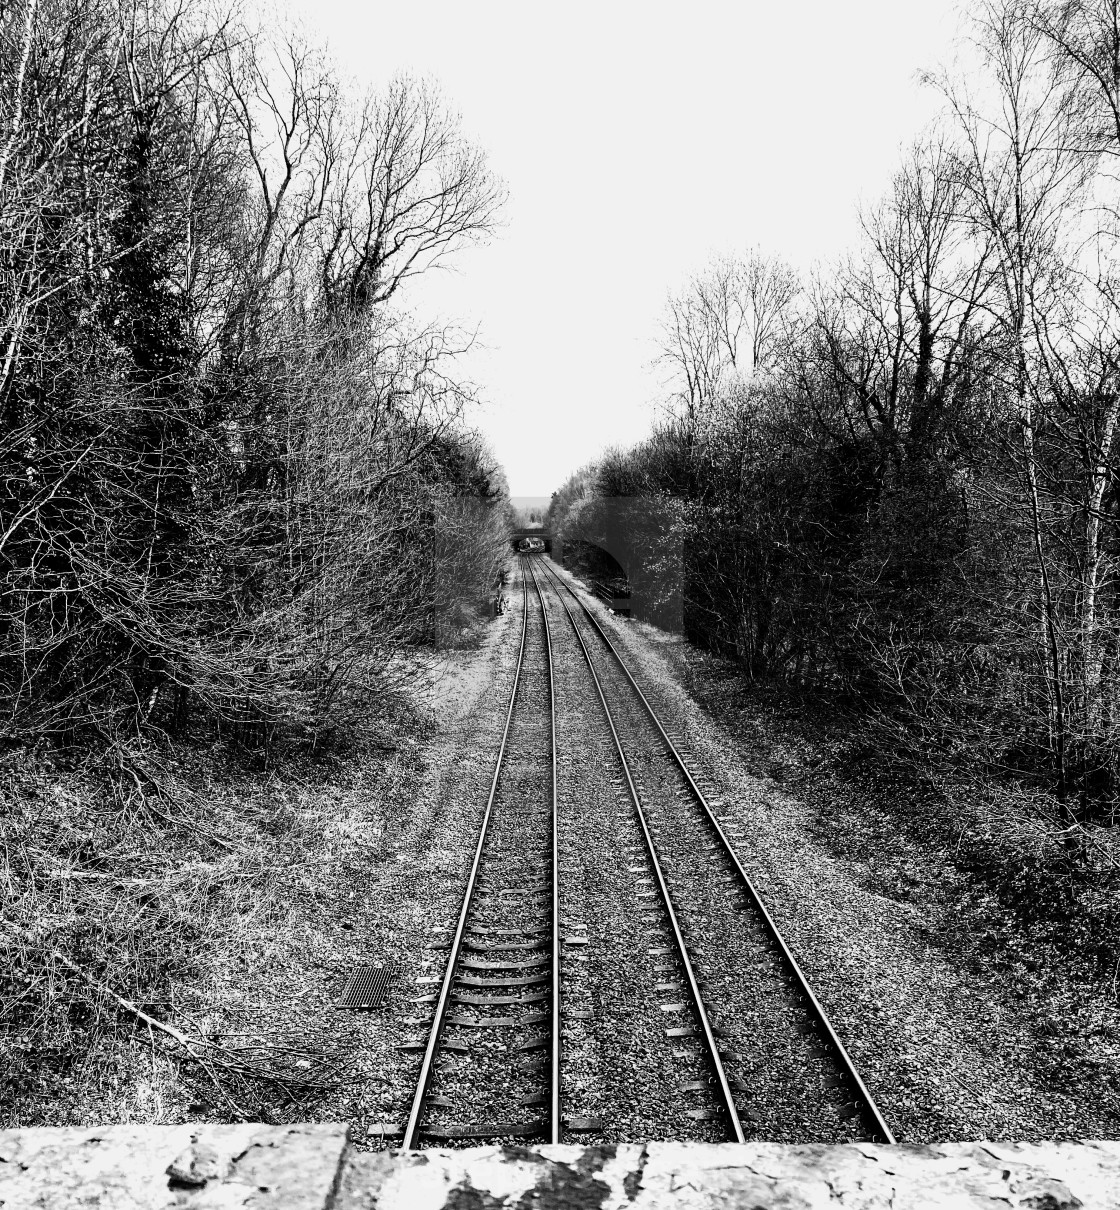 "Train Tracks" stock image